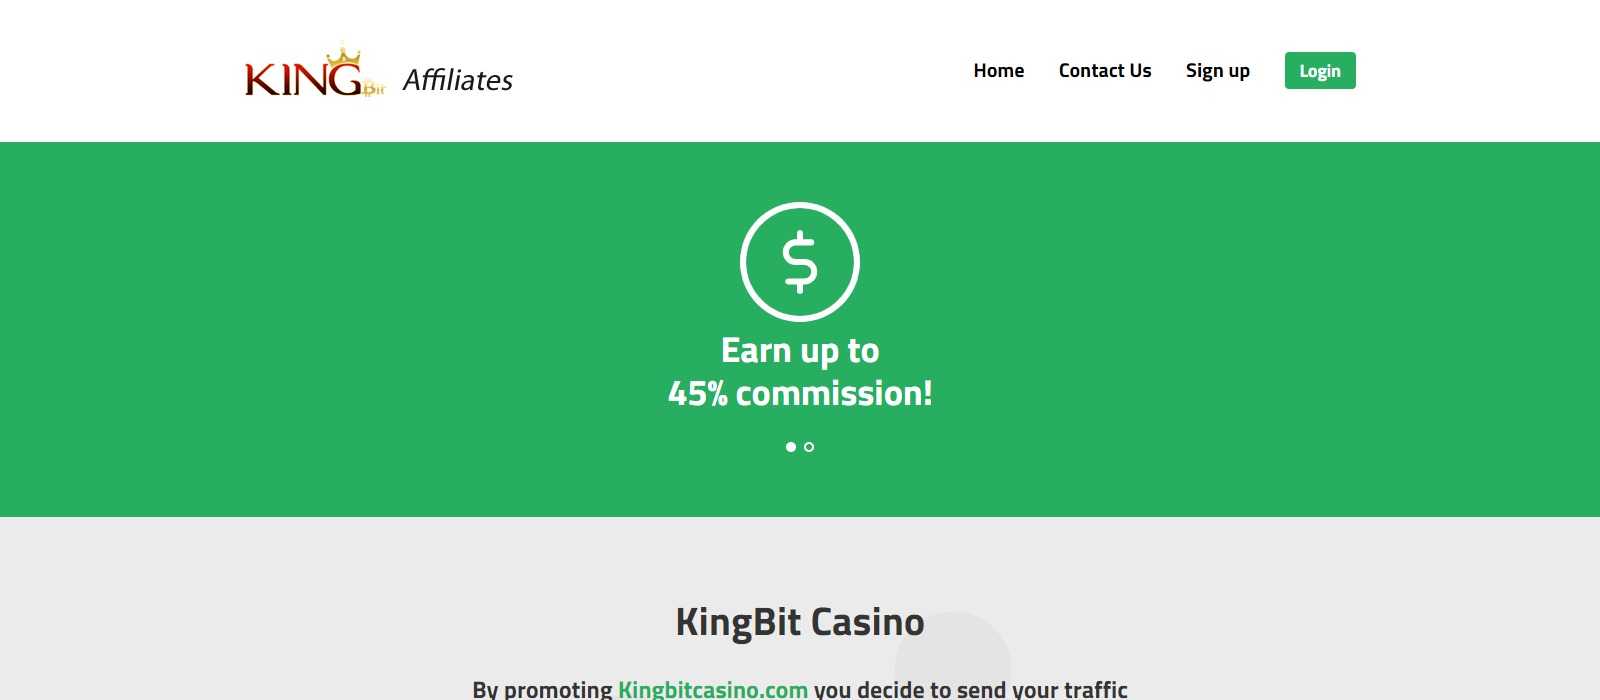 Kingbit Casino Affiliate Program Review: Up to 45% Recurring Revenue Share